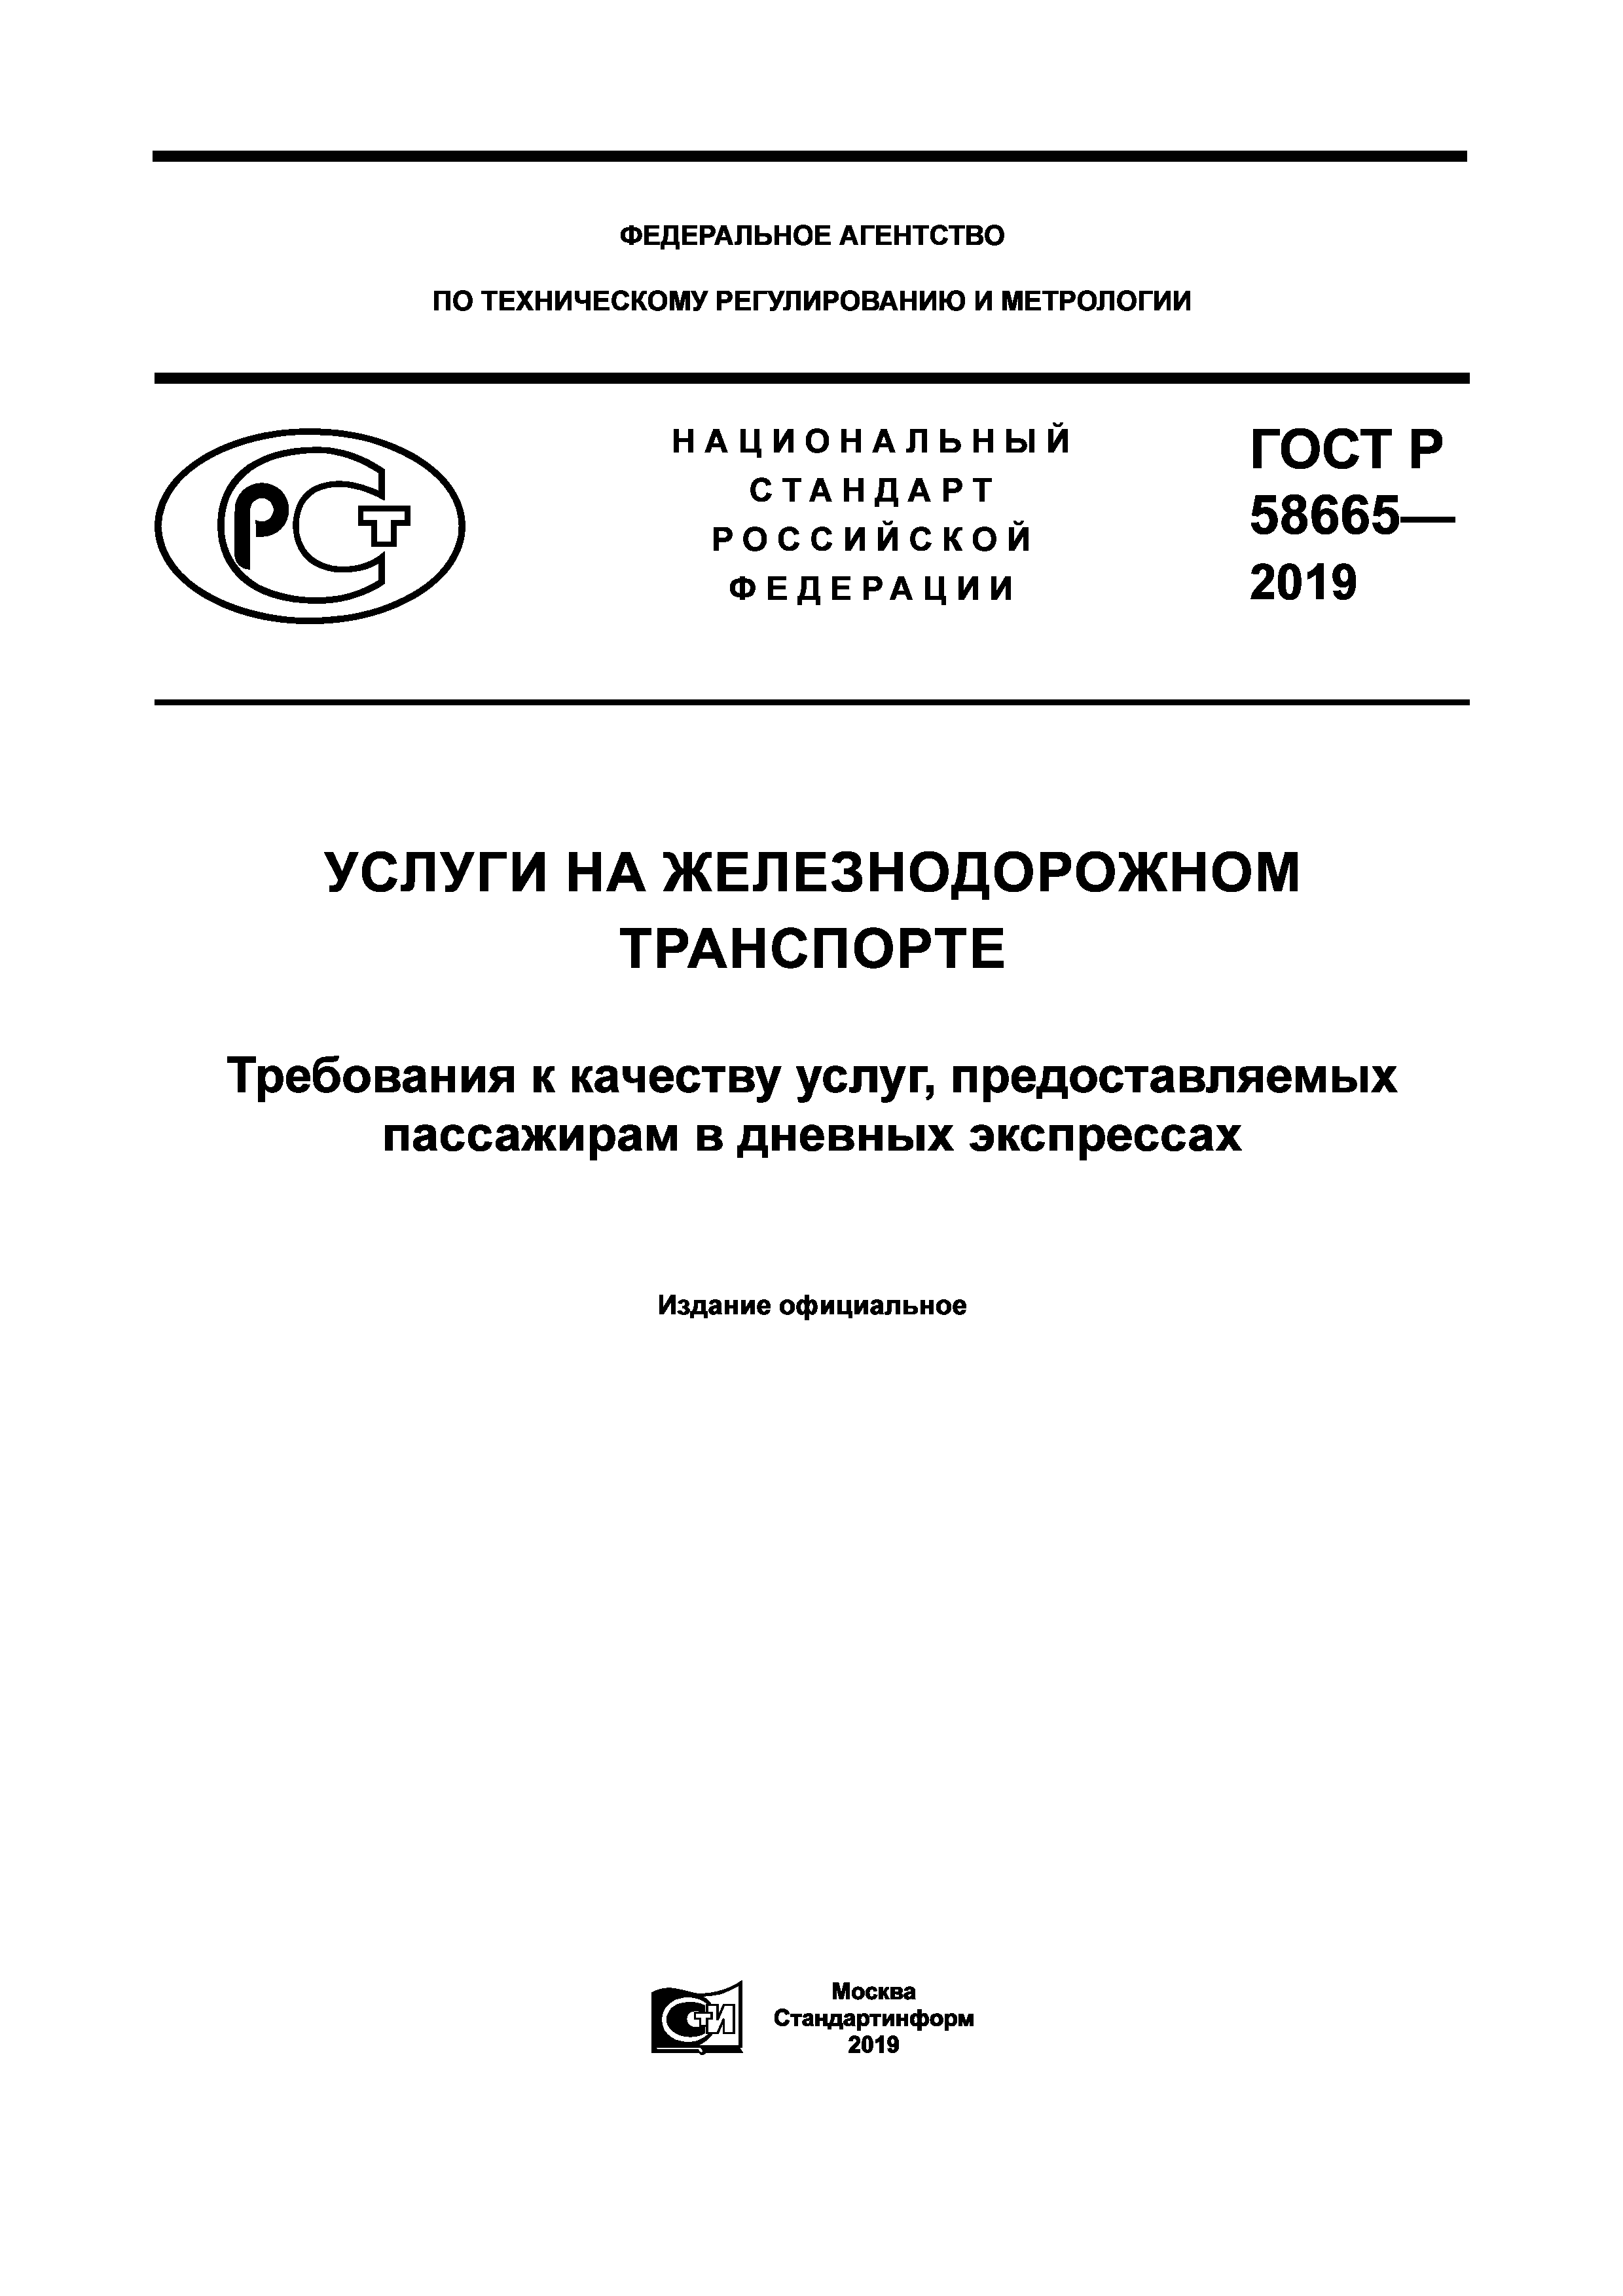 ГОСТ Р 58665-2019